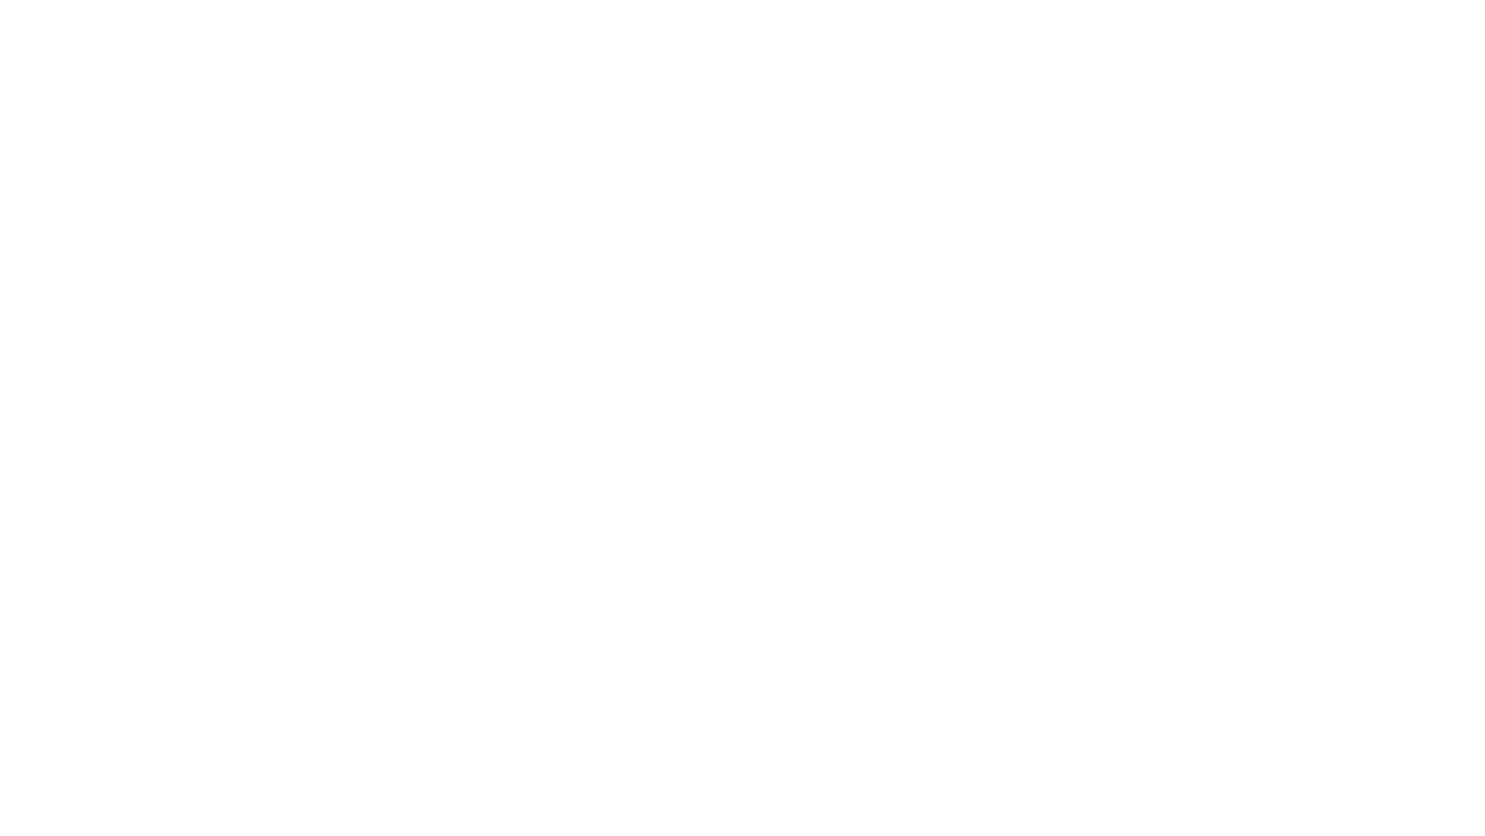 Sisterhood Conference